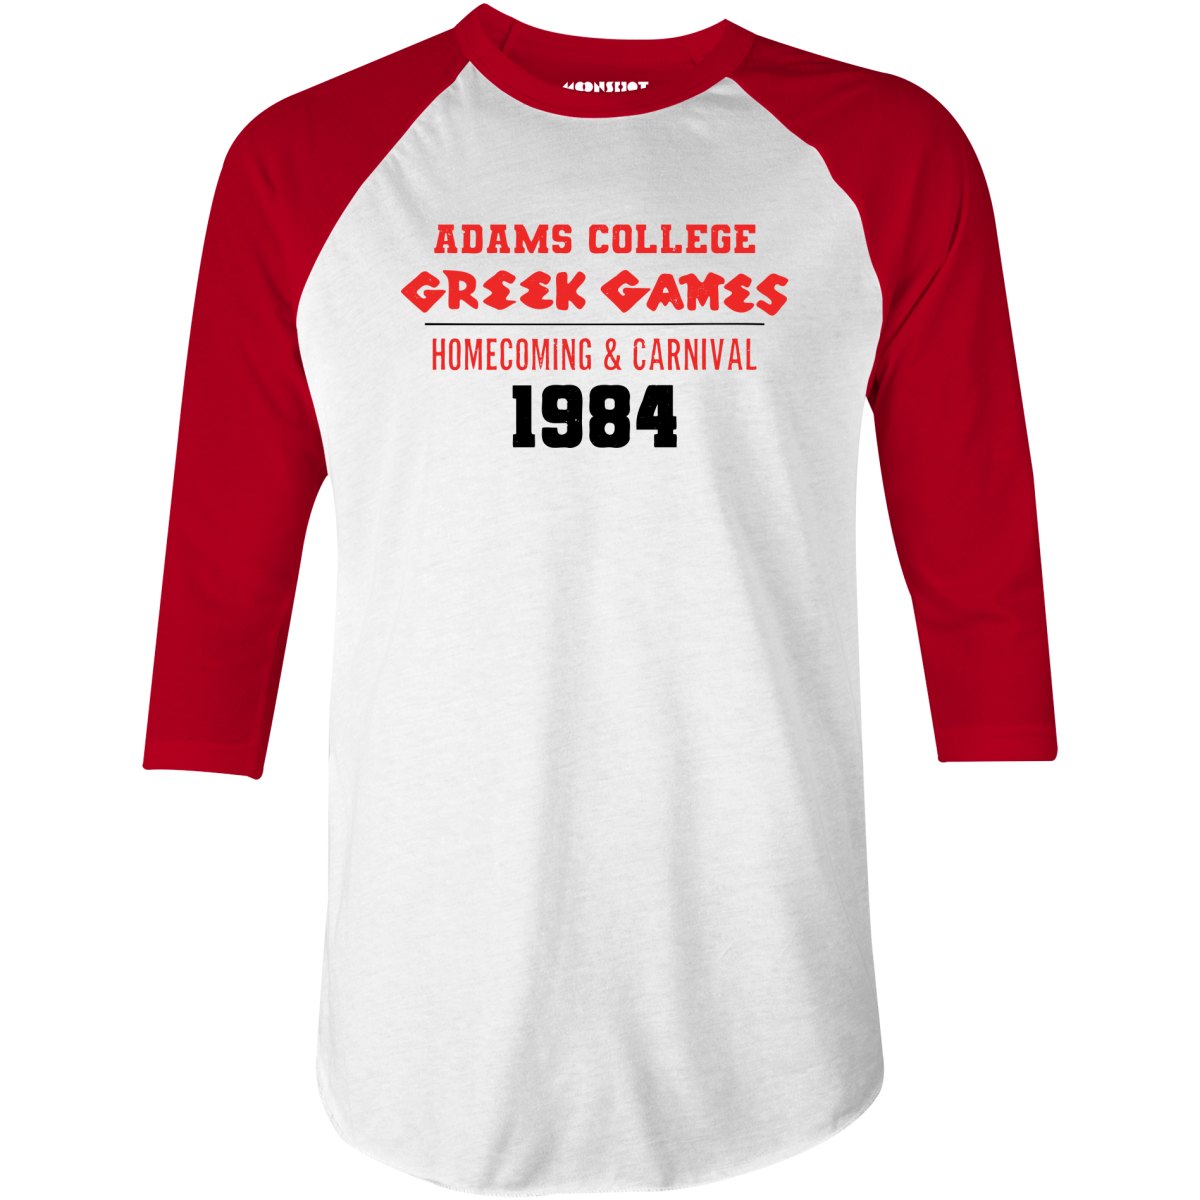 Adams College Greek Games 1984 - 3/4 Sleeve Raglan T-Shirt